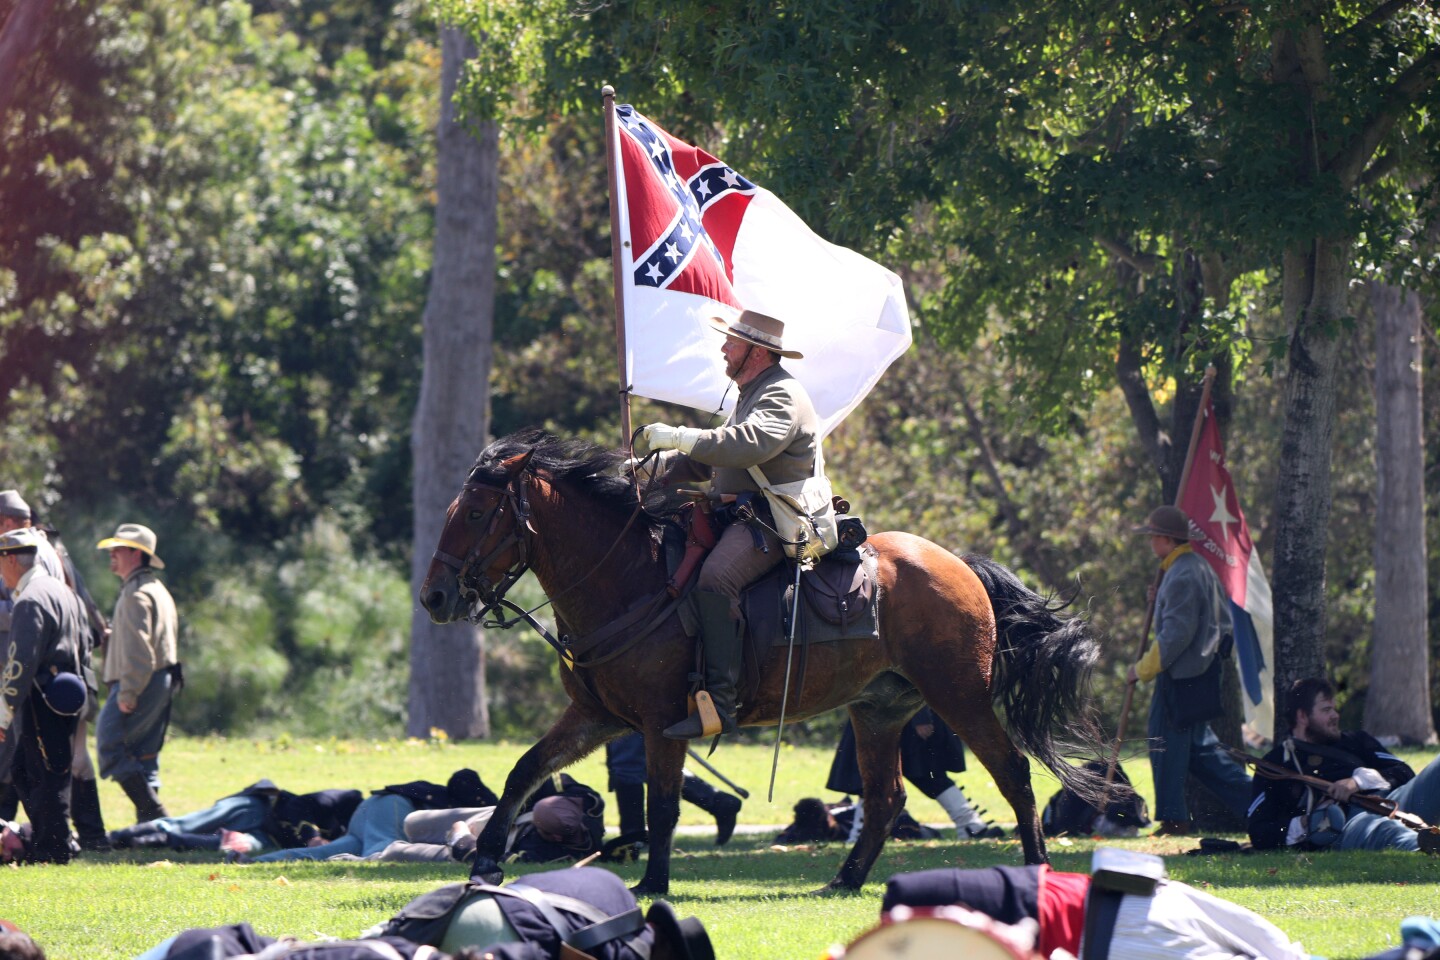 Union battles Rebels at Civil War reenactment Los Angeles Times